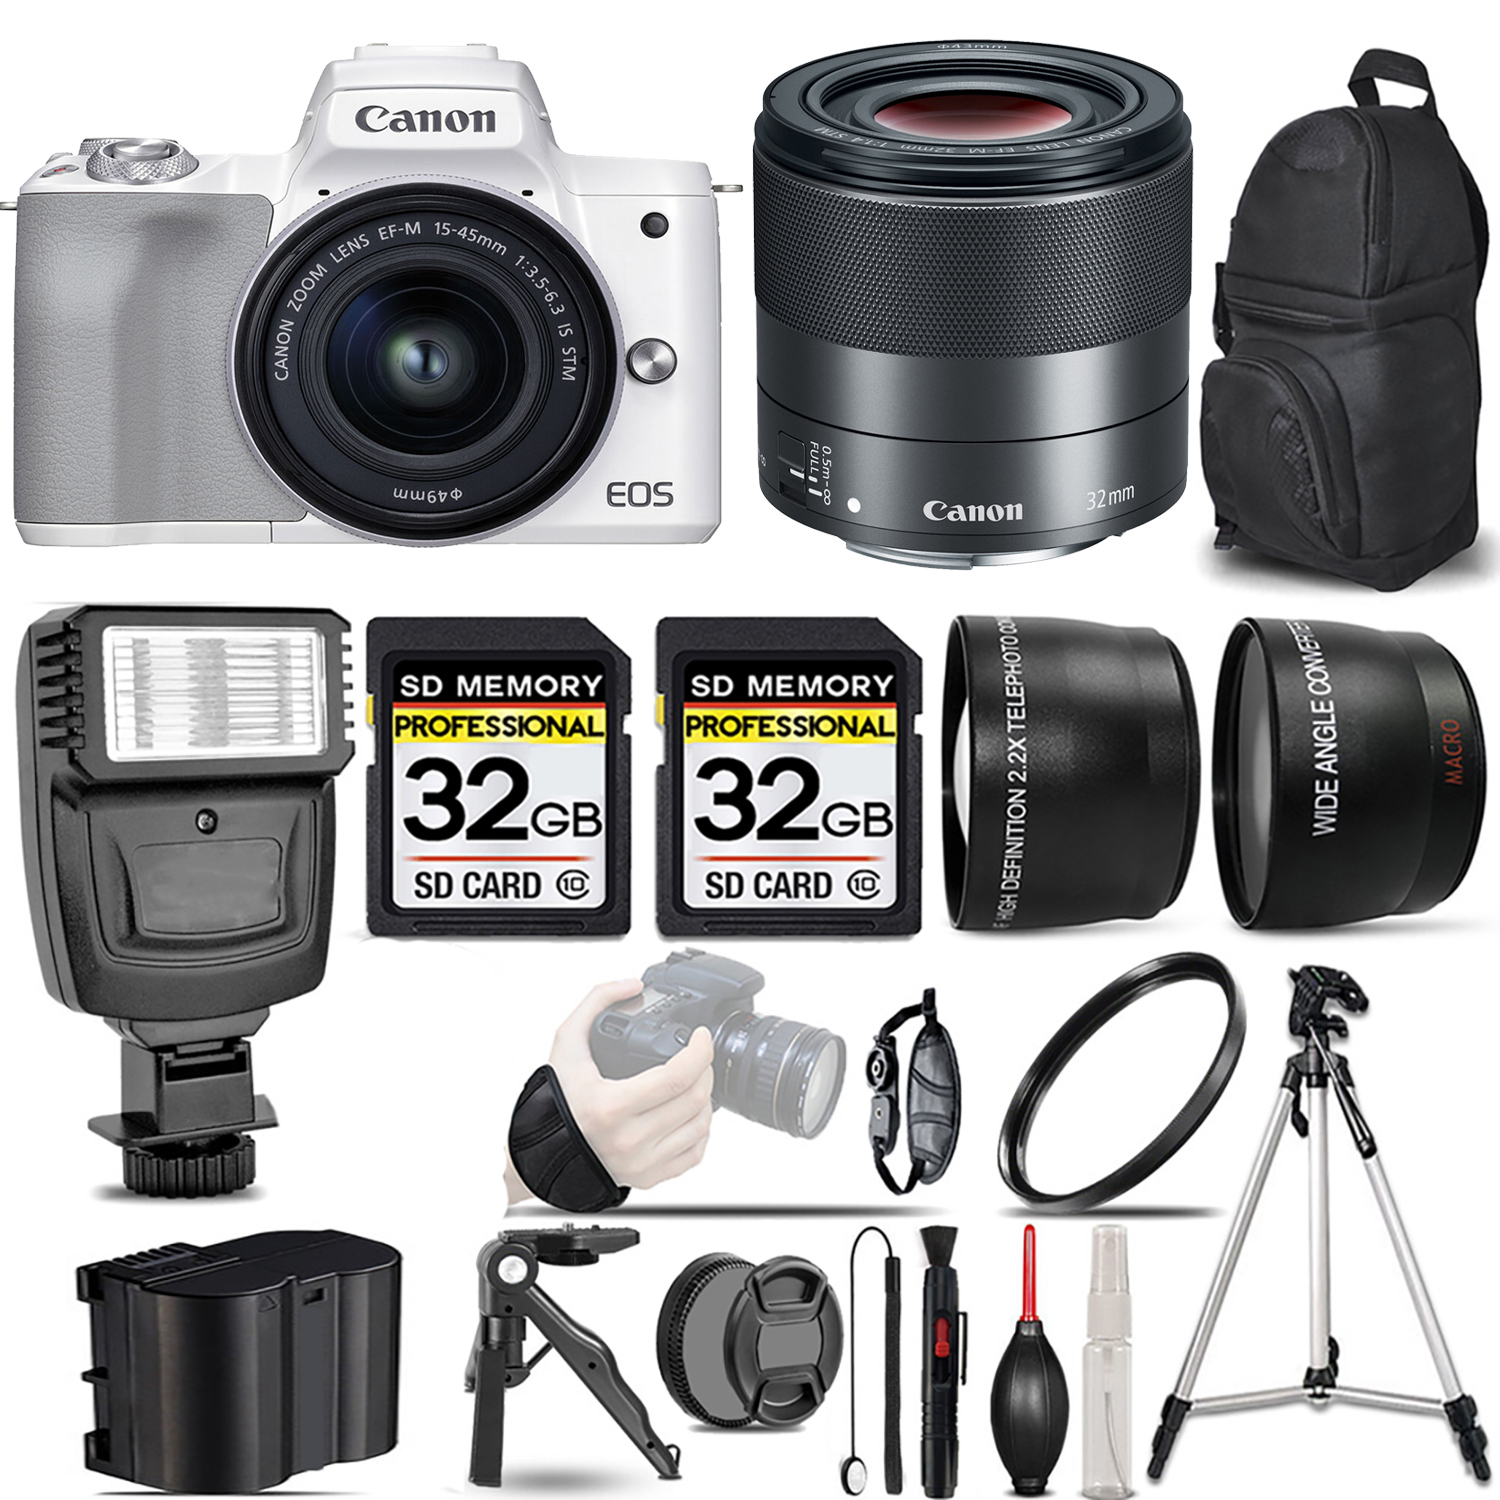 M50 Mark II + 15-45mm Lens (White) + 32mm f/1.4 STM Lens + Flash + 64GB - Kit *FREE SHIPPING*